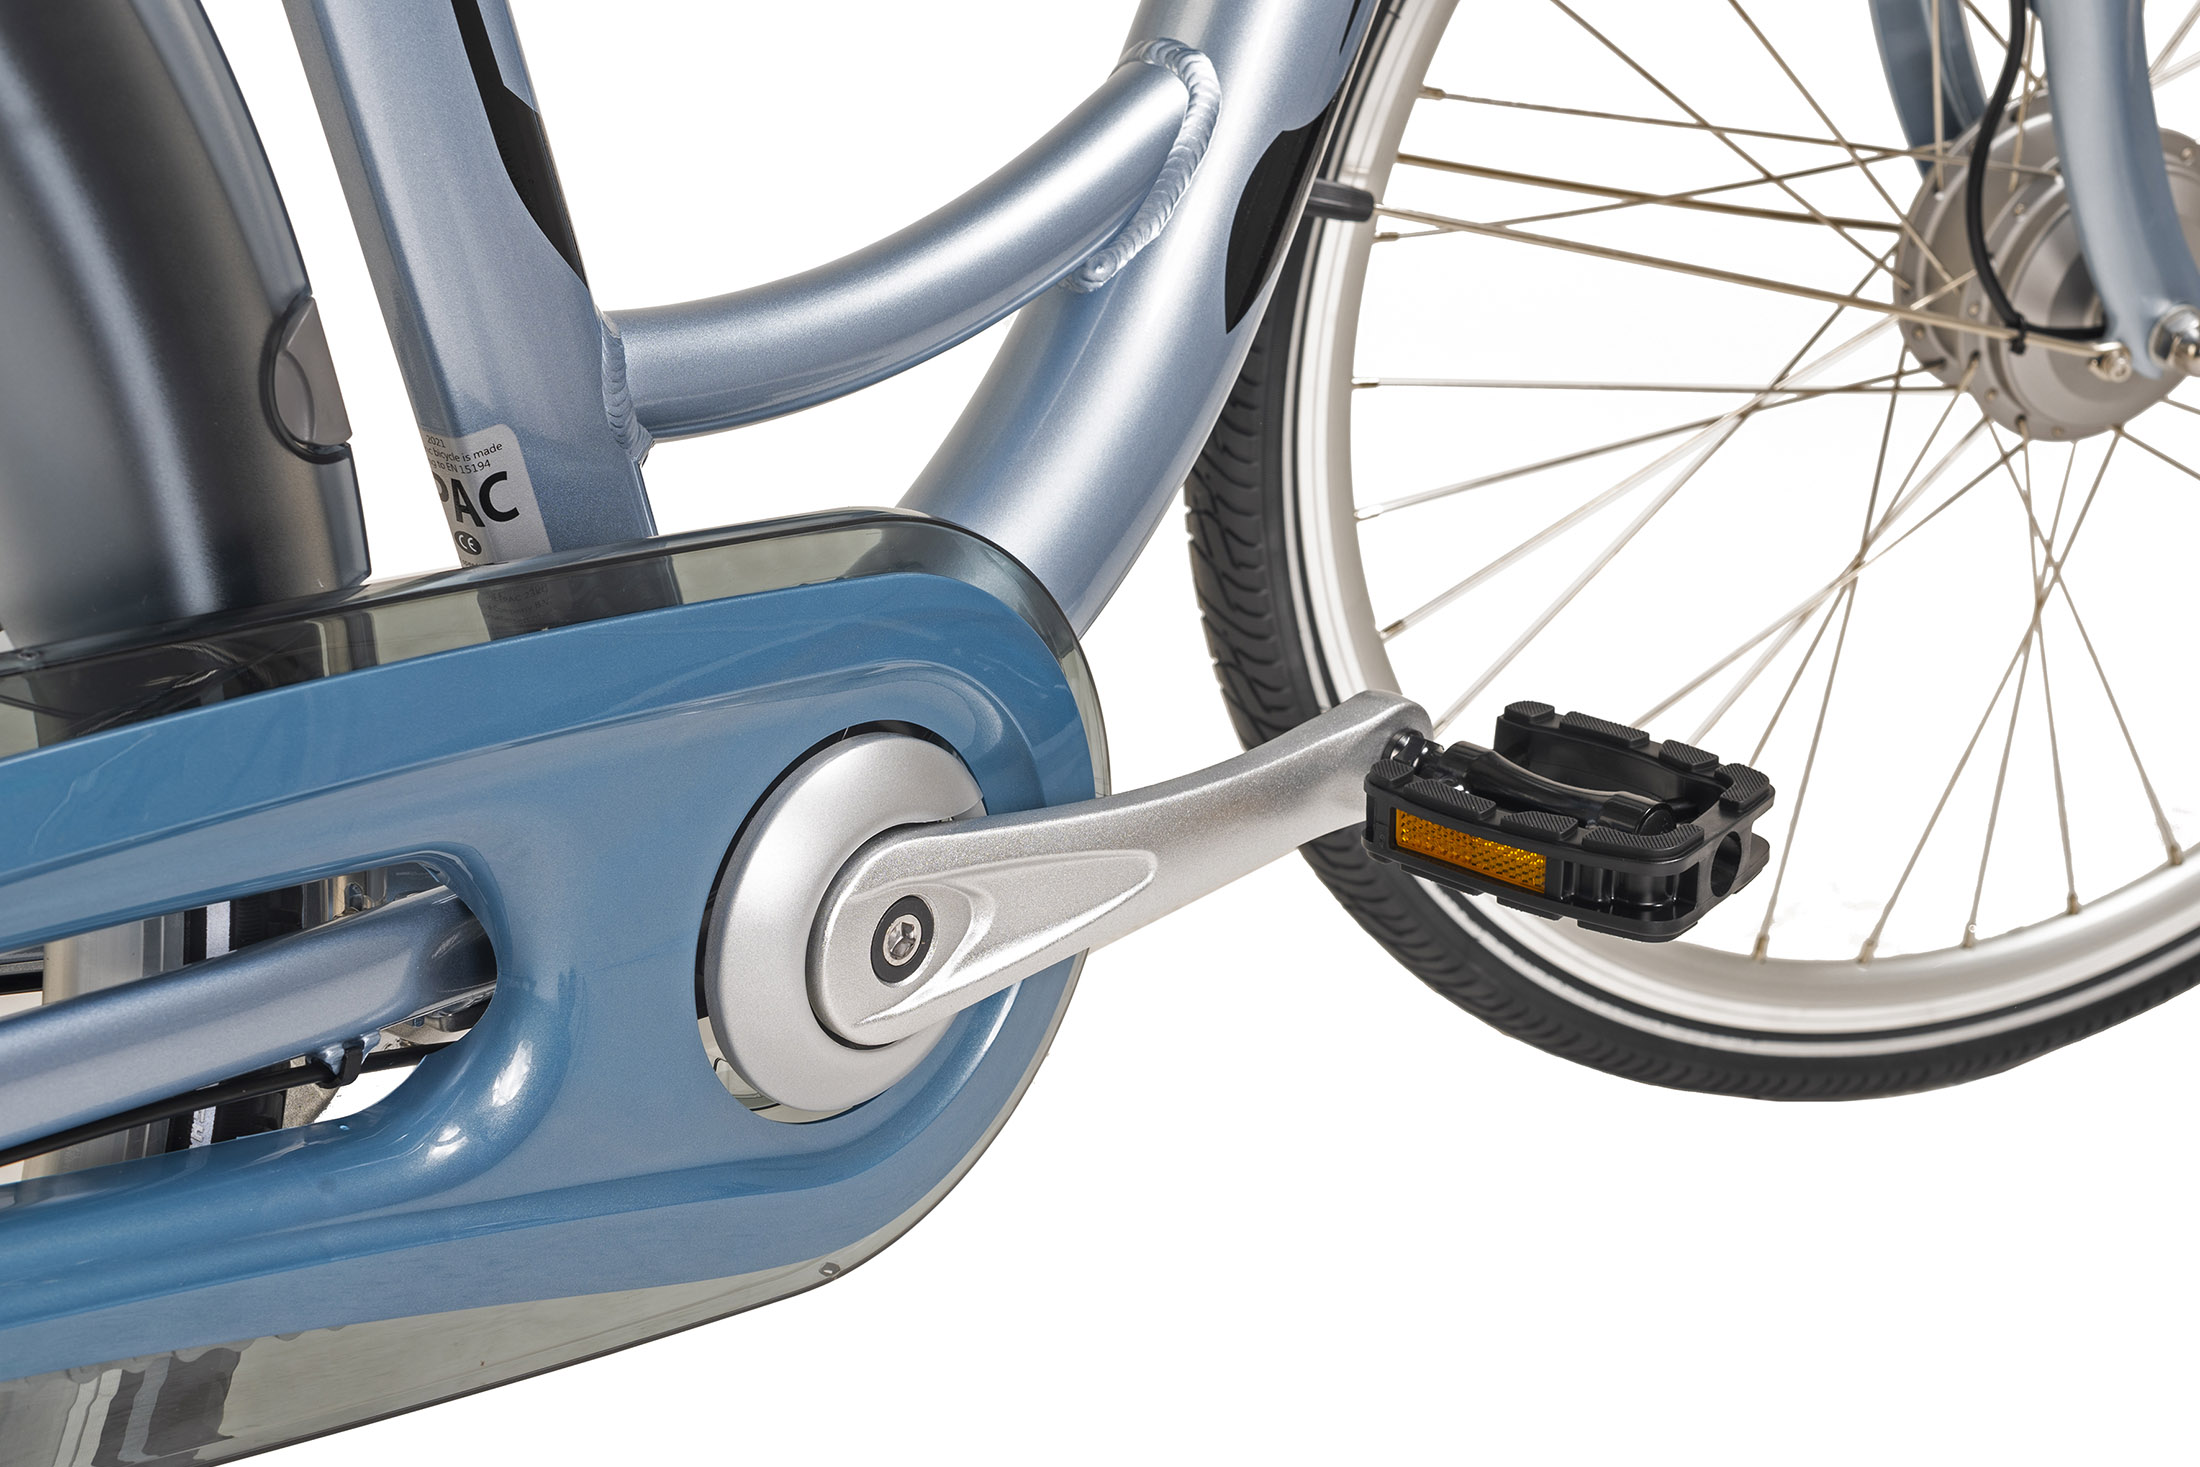 VOGUE Basic Citybike (Laufradgröße: 28 cm, Blau) 48 Zoll, Rahmenhöhe: Unisex-Rad, 468